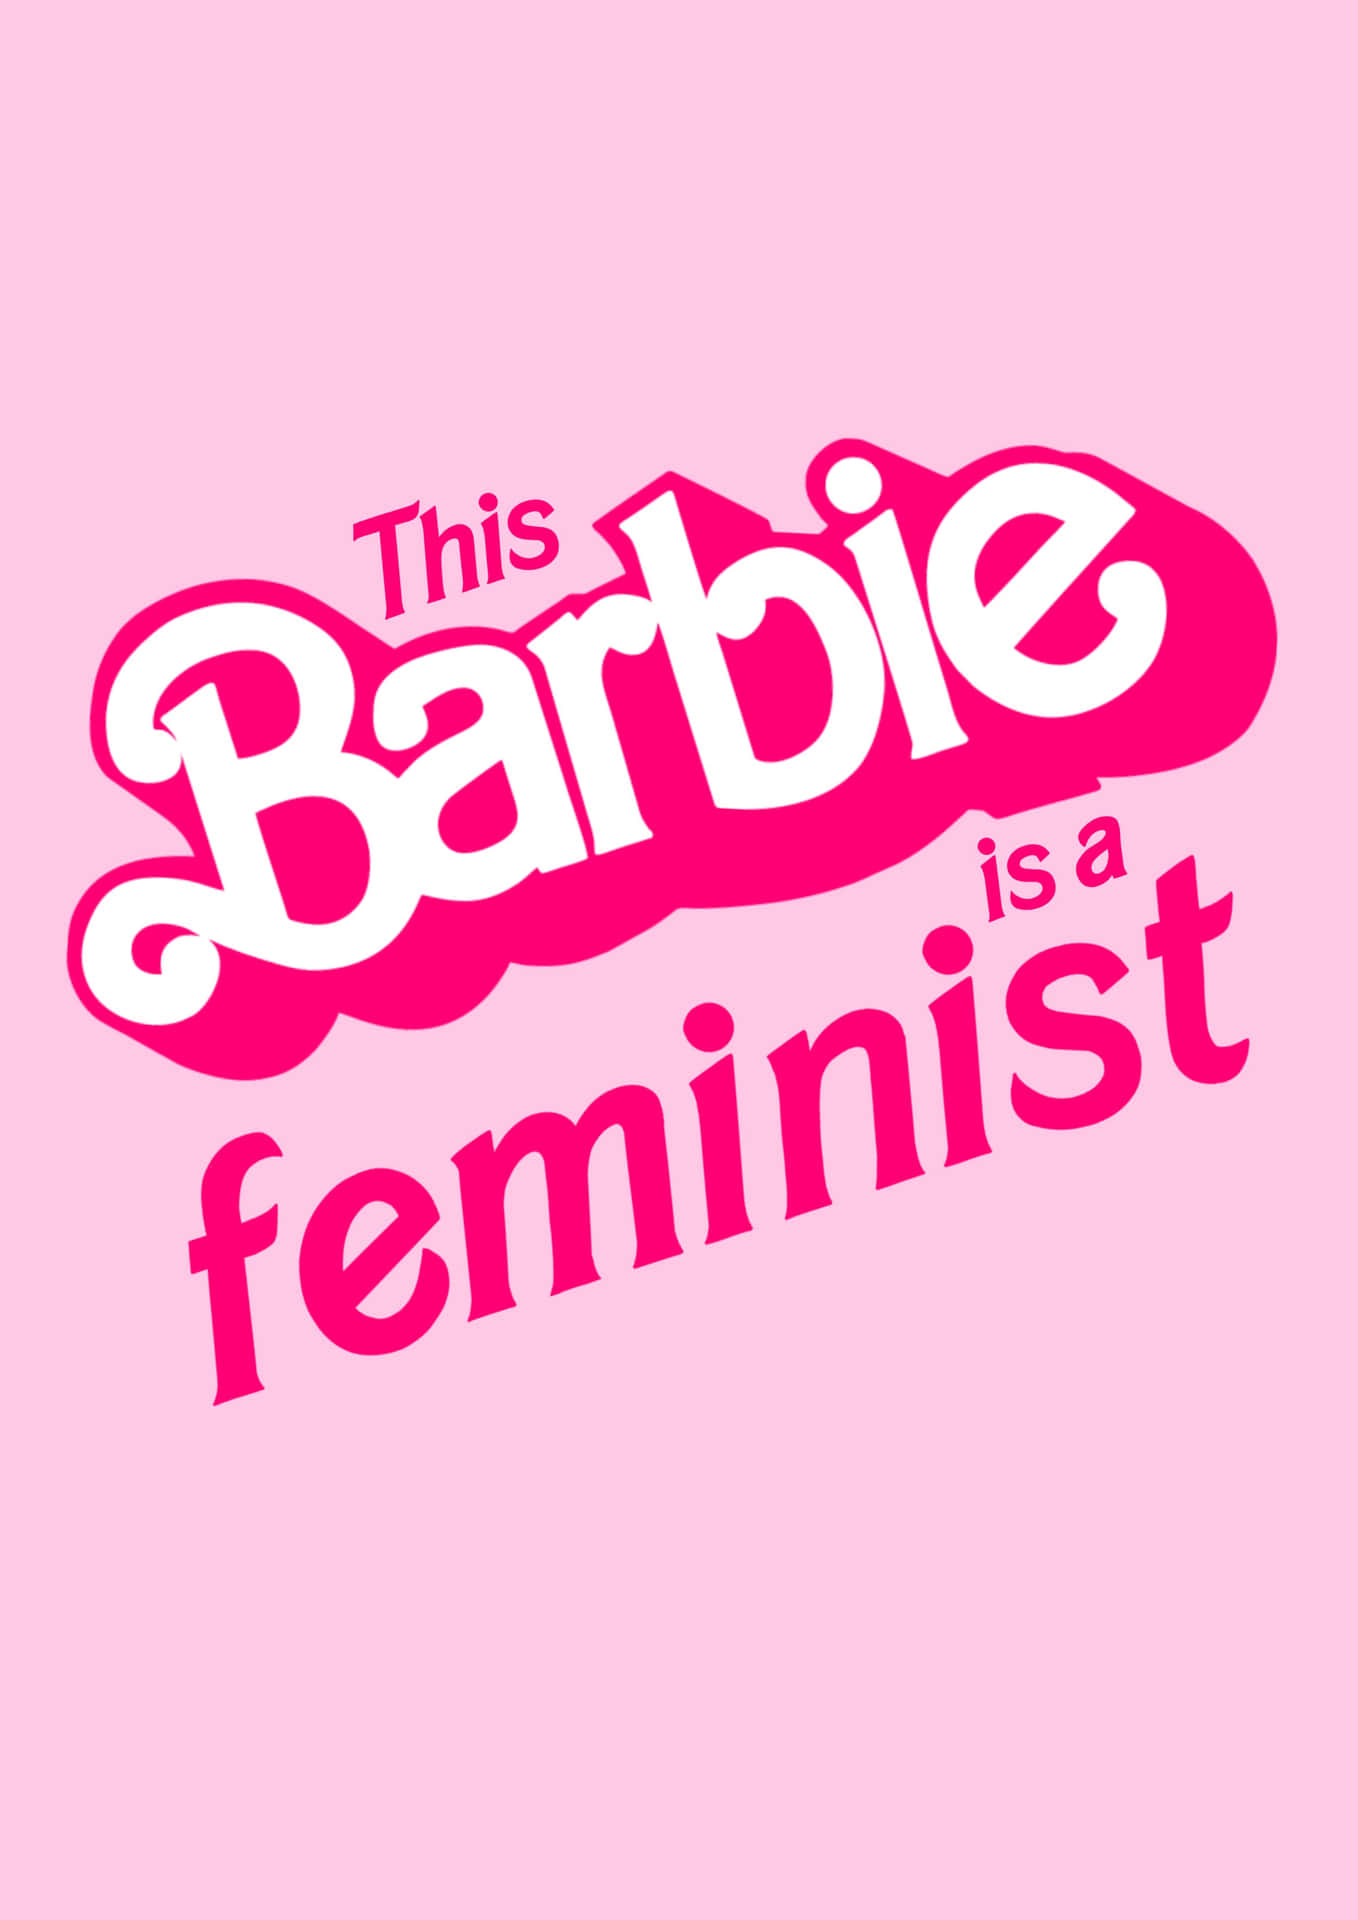 Barbie Feminist Statement Wallpaper